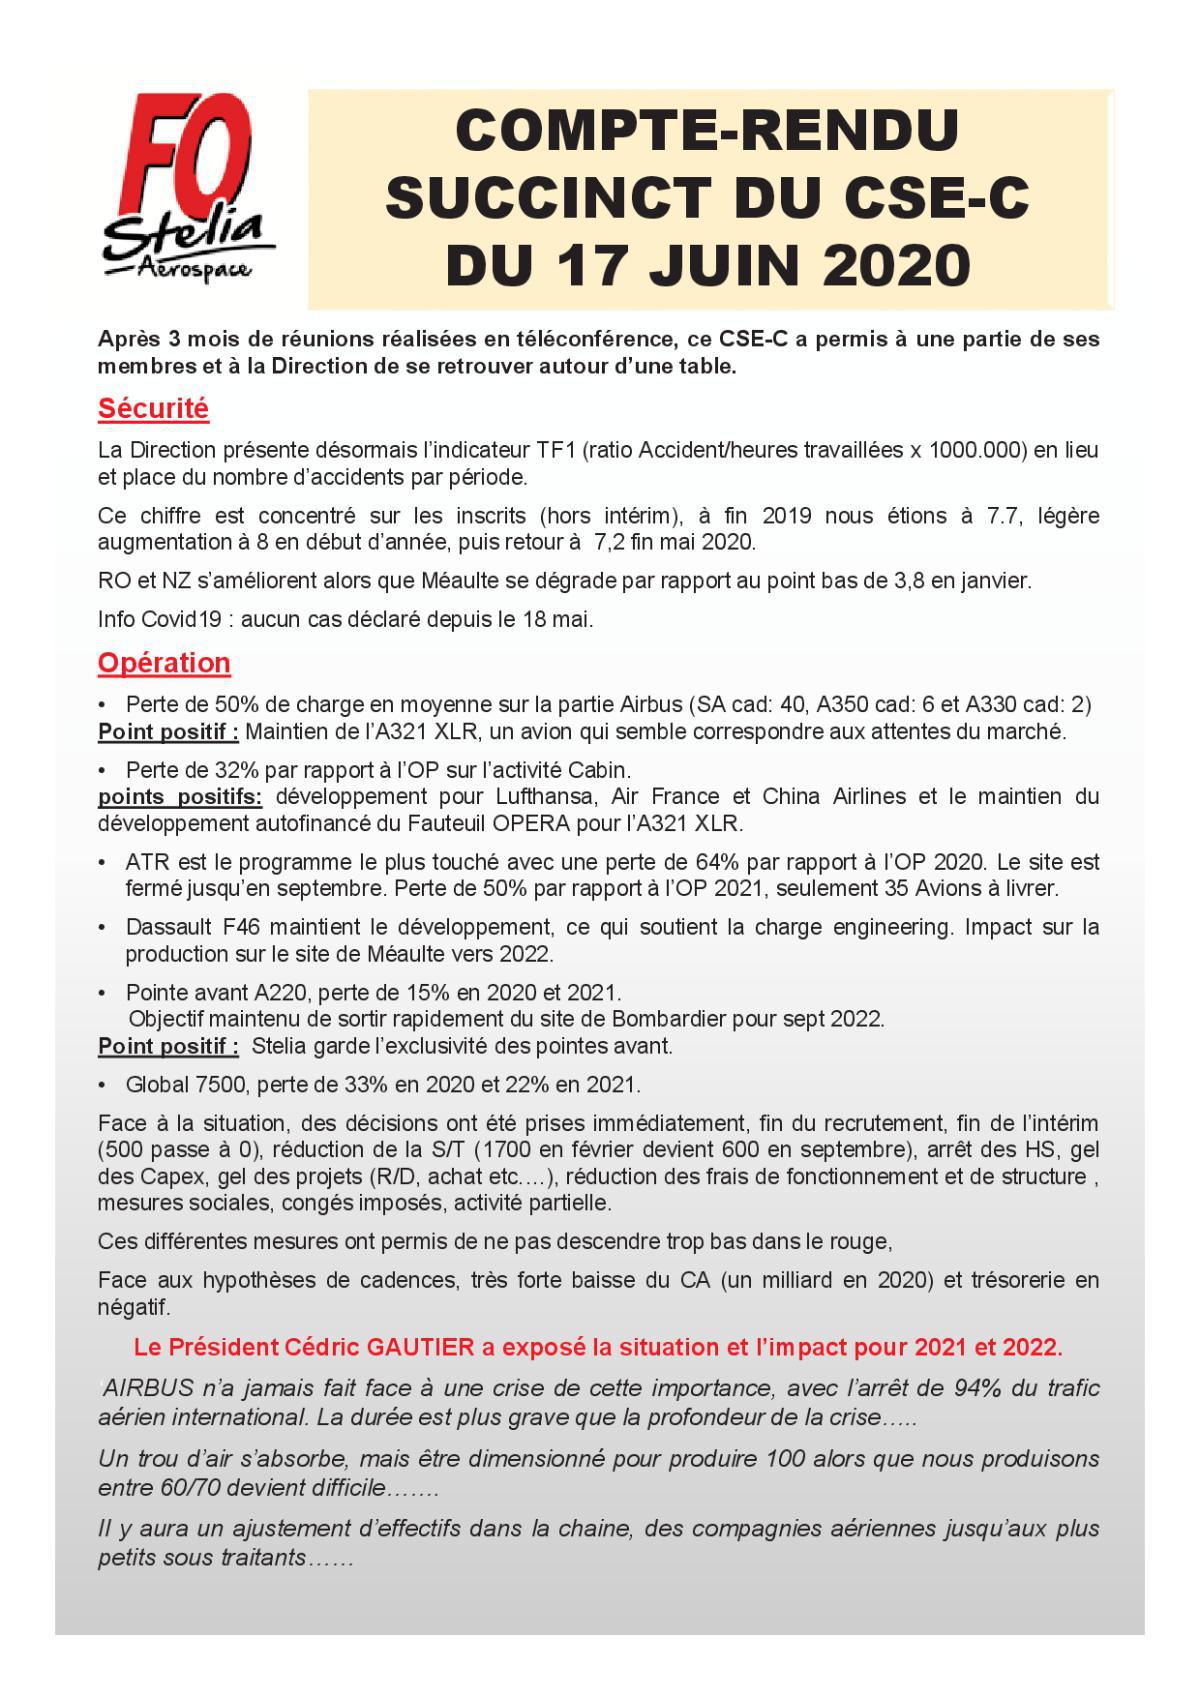 Flash Info : CR succinct du CSE-C du 17 juin 2020